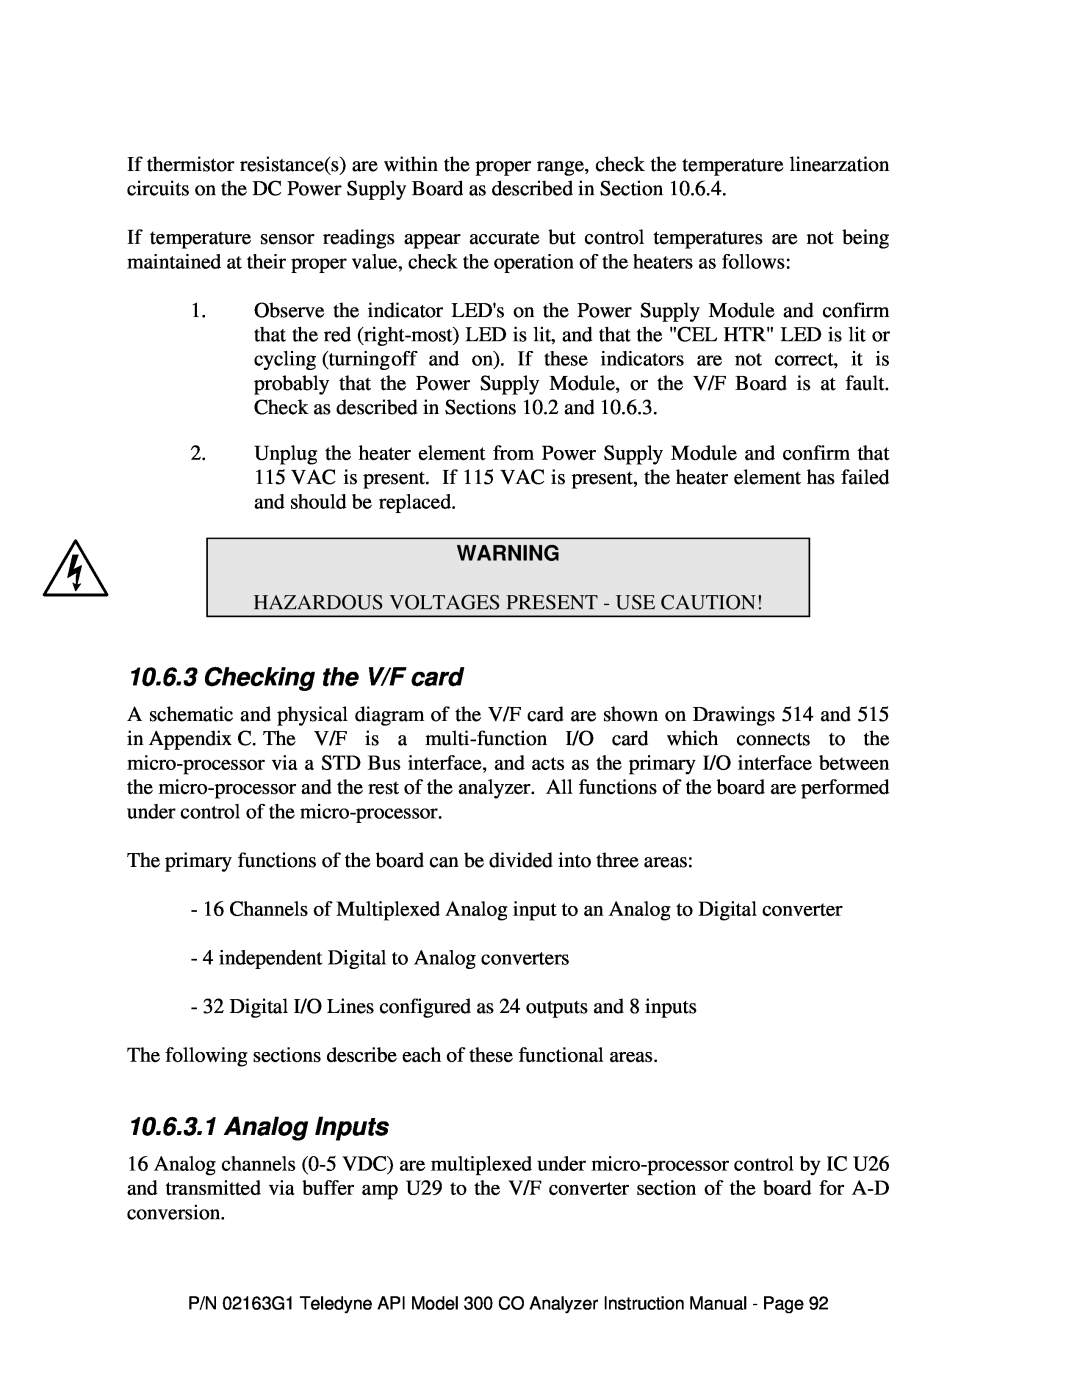 Teledyne 300 instruction manual Checking the V/F card, Analog Inputs 